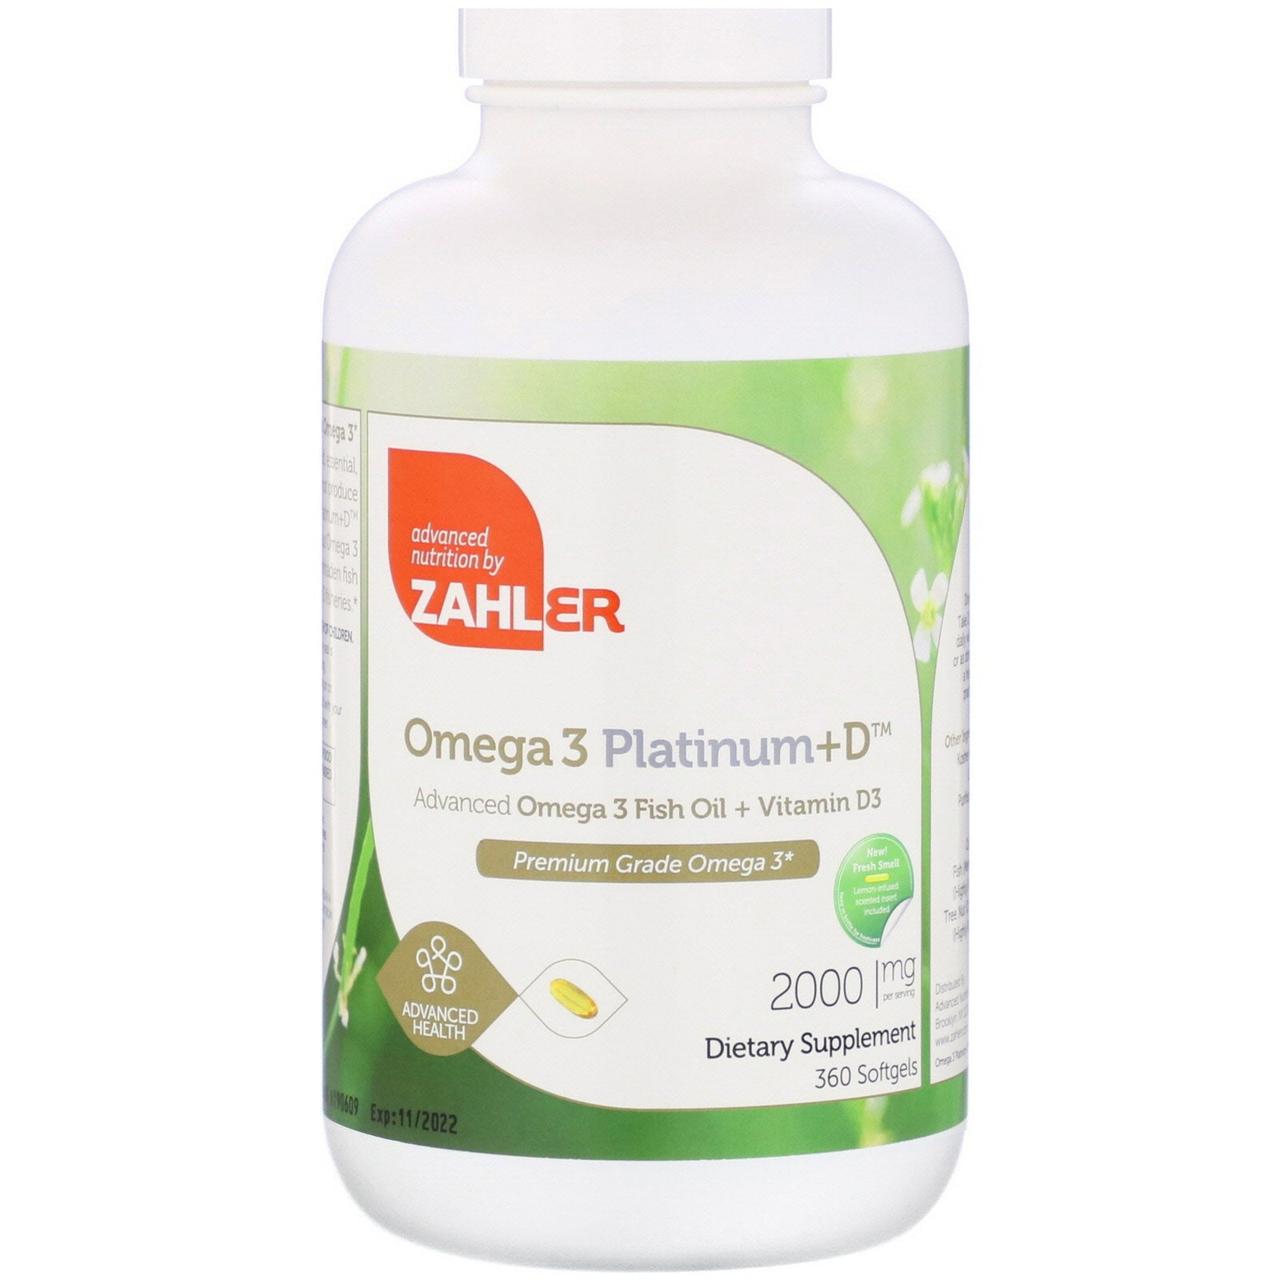 Zahler, Omega 3 Platinum+D, Advanced Omega 3 with Vitamin D3, 3000 mg, 360 Softgels